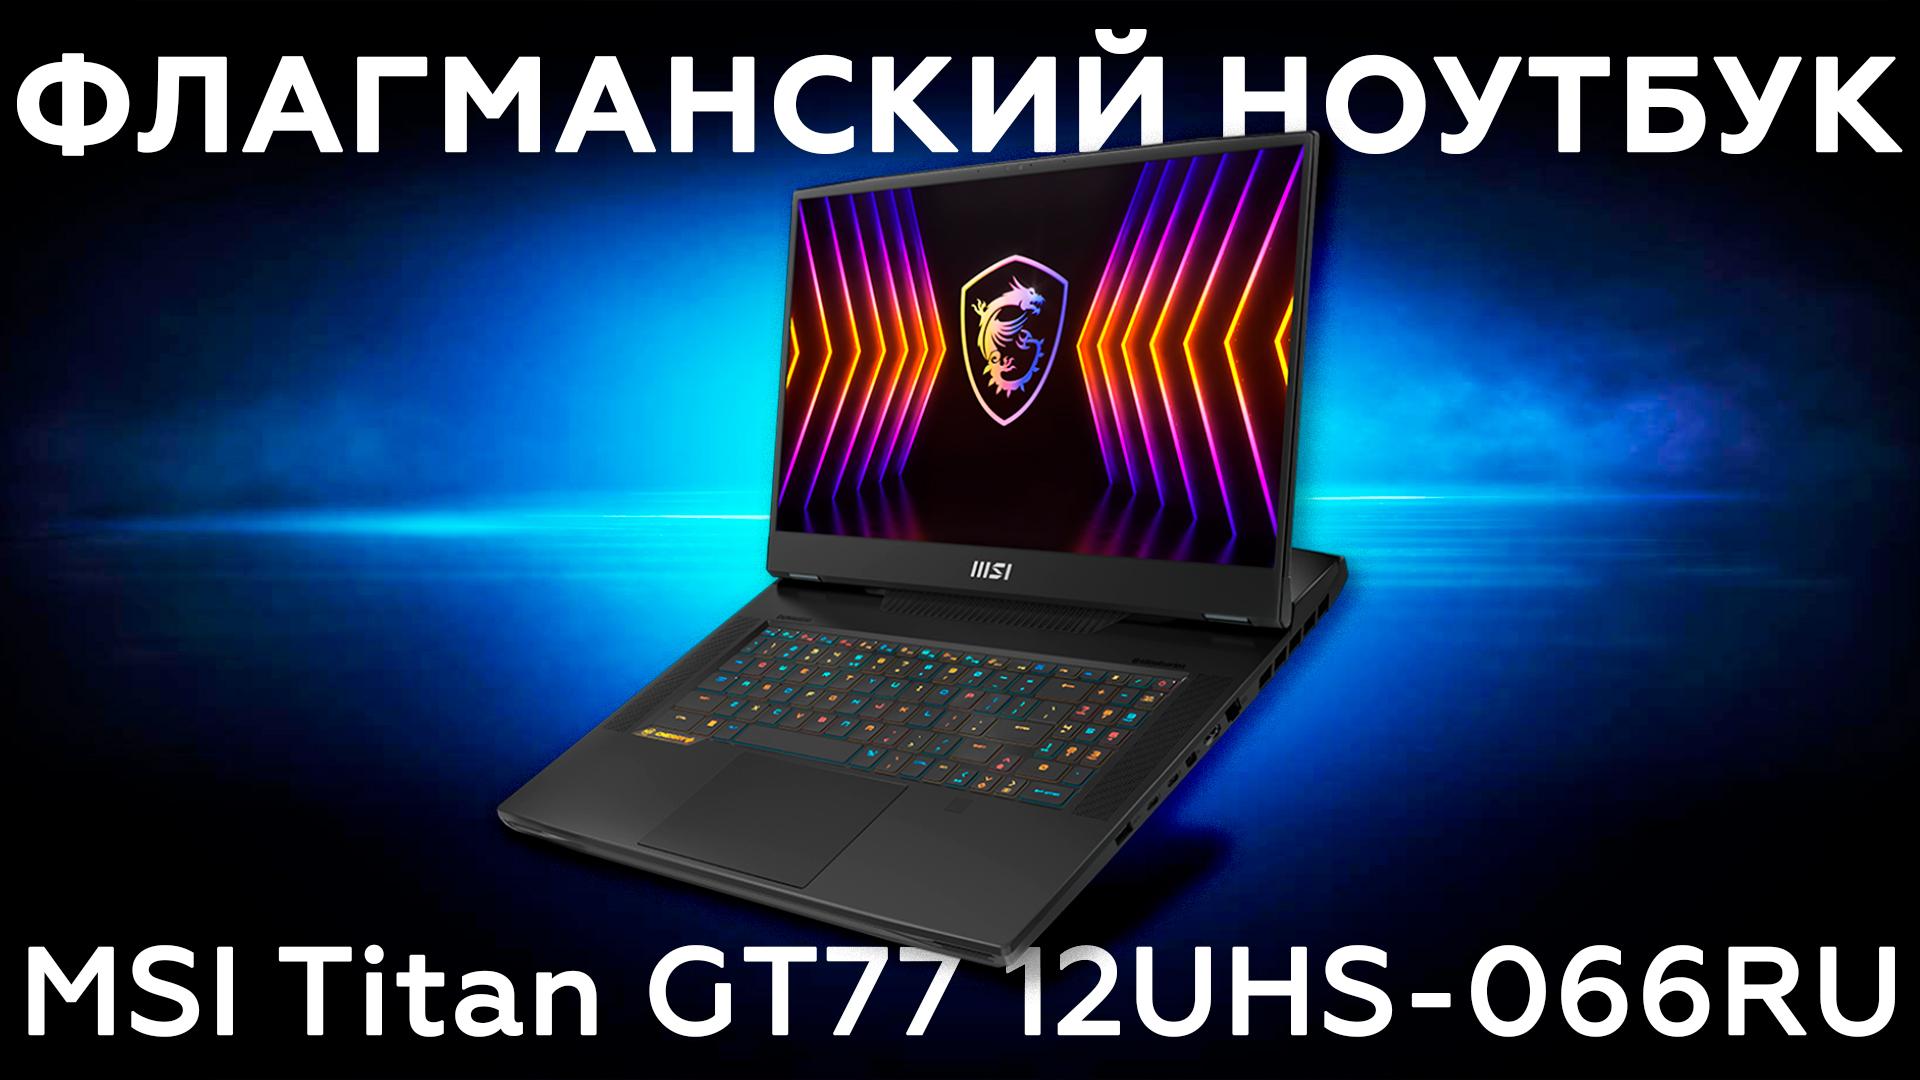 Обзор флагманского ноутбука MSI Titan GT77 12UHS-066RU